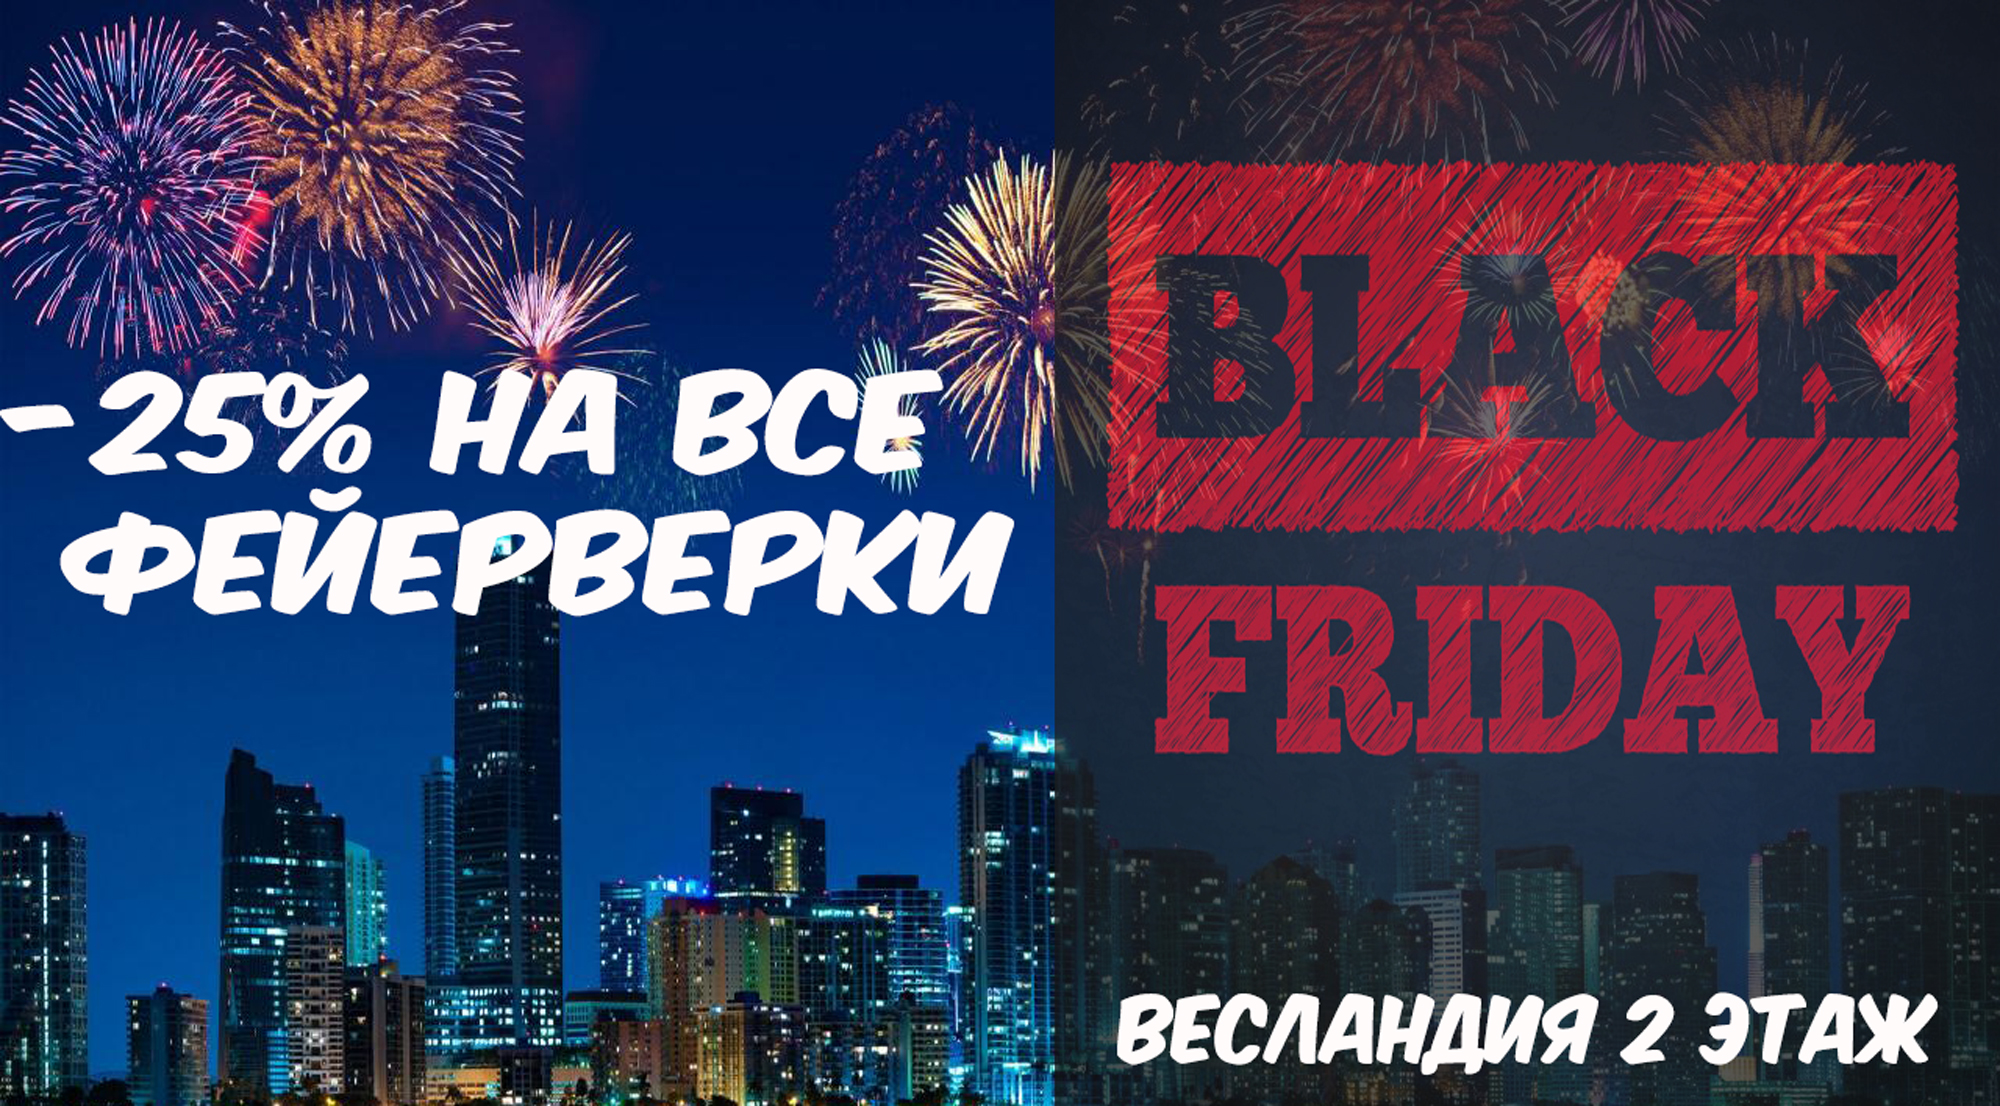 Black Friday - скидка 25% на все фейерверки